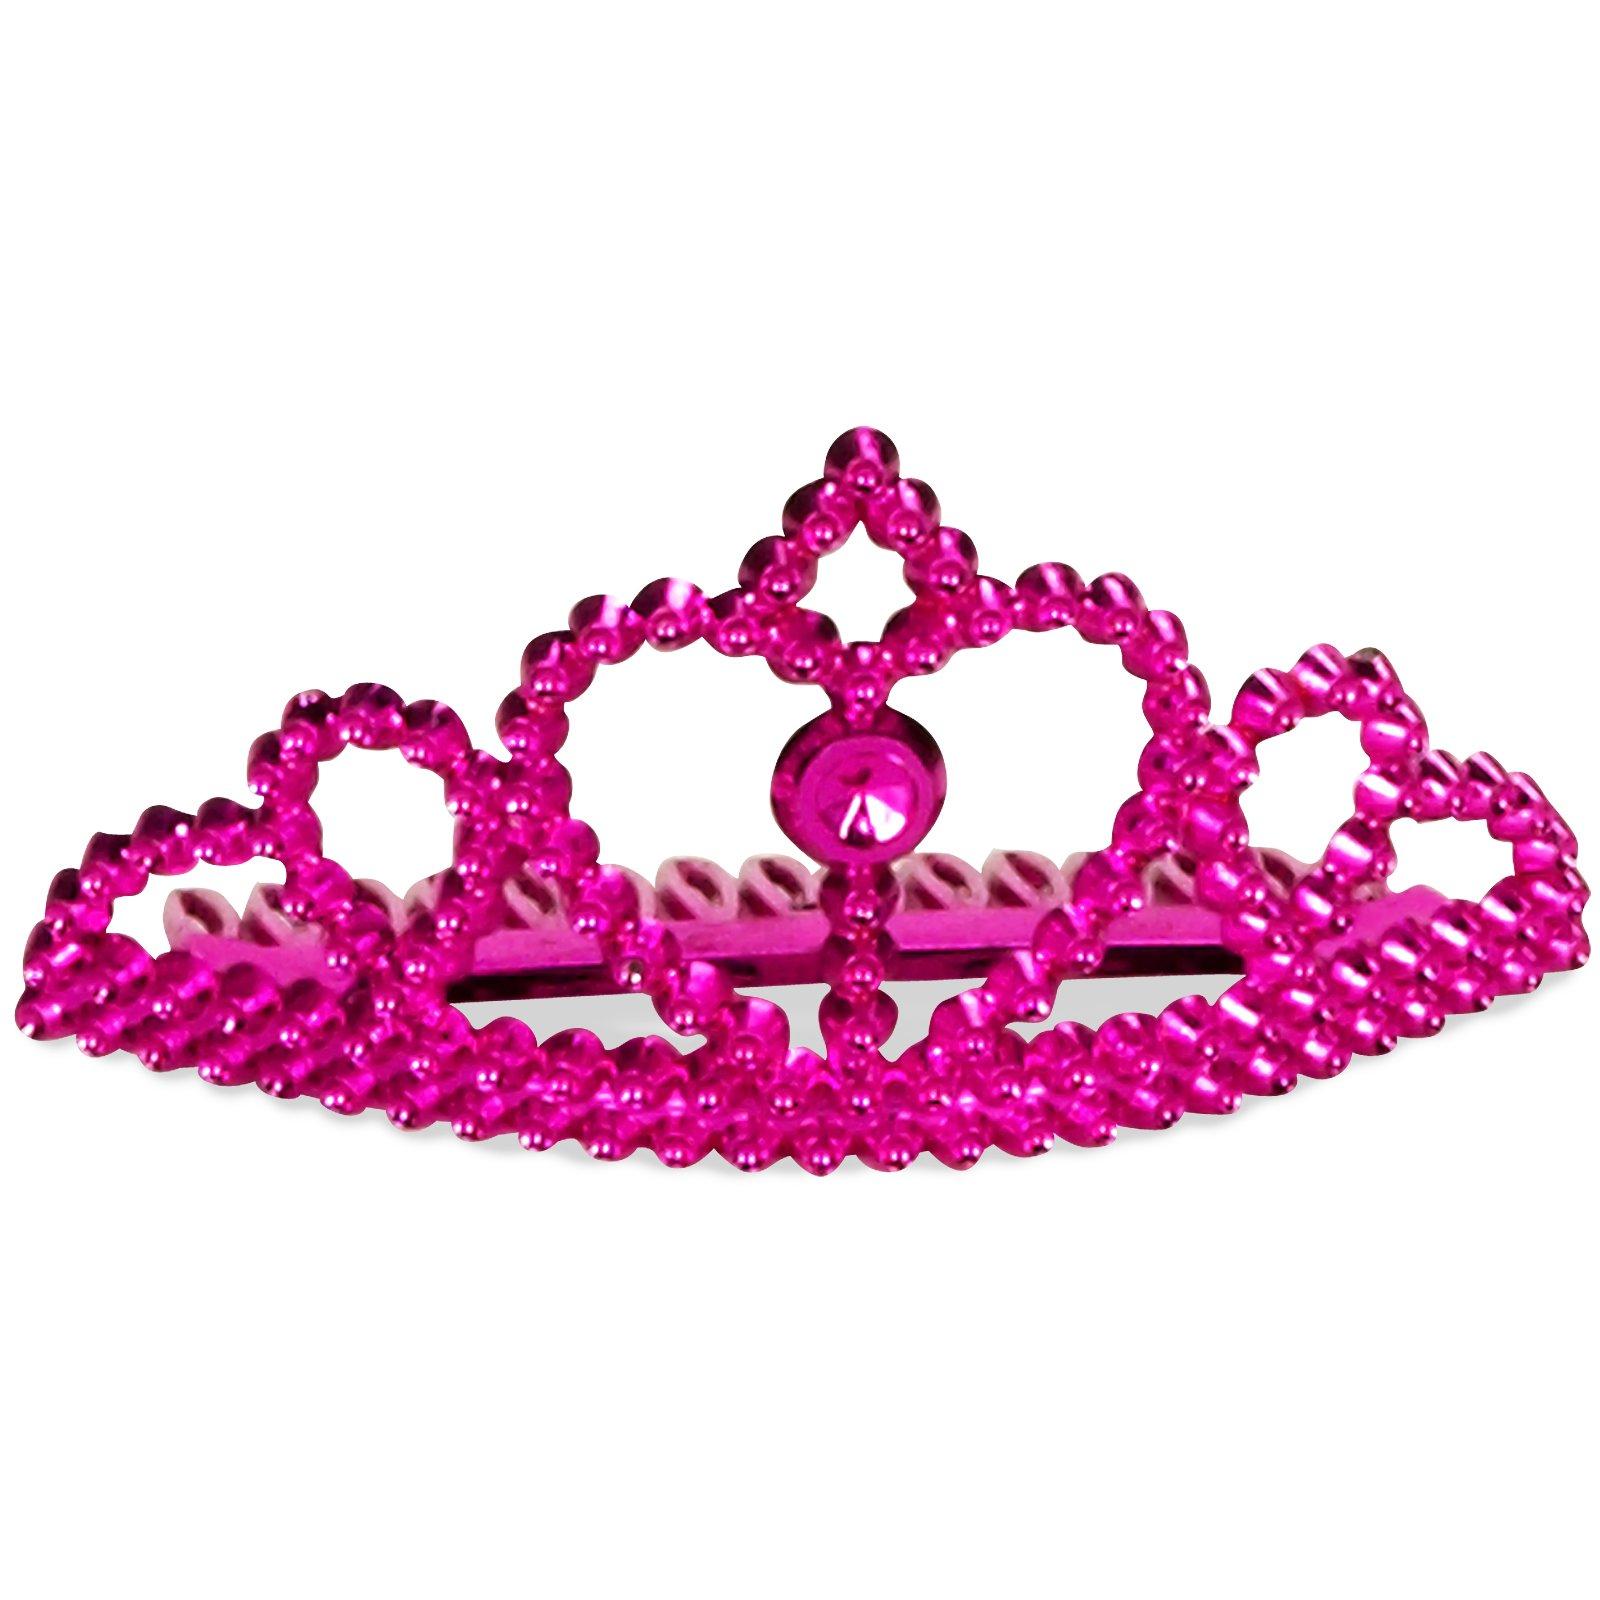 tiara clip art free download - photo #5